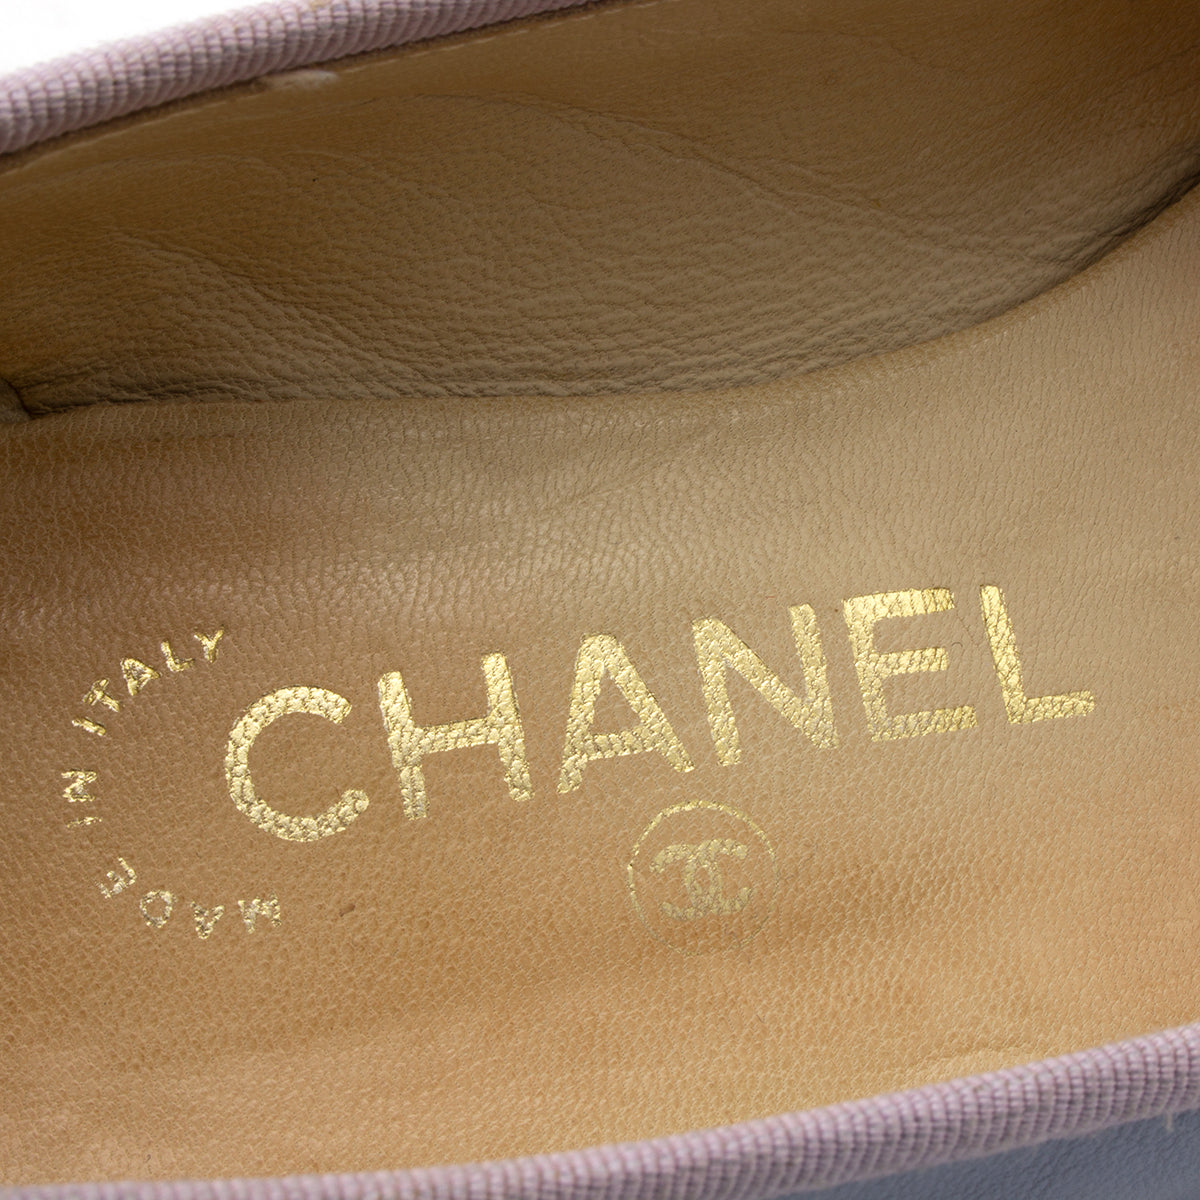 Chanel ballerinas shoes